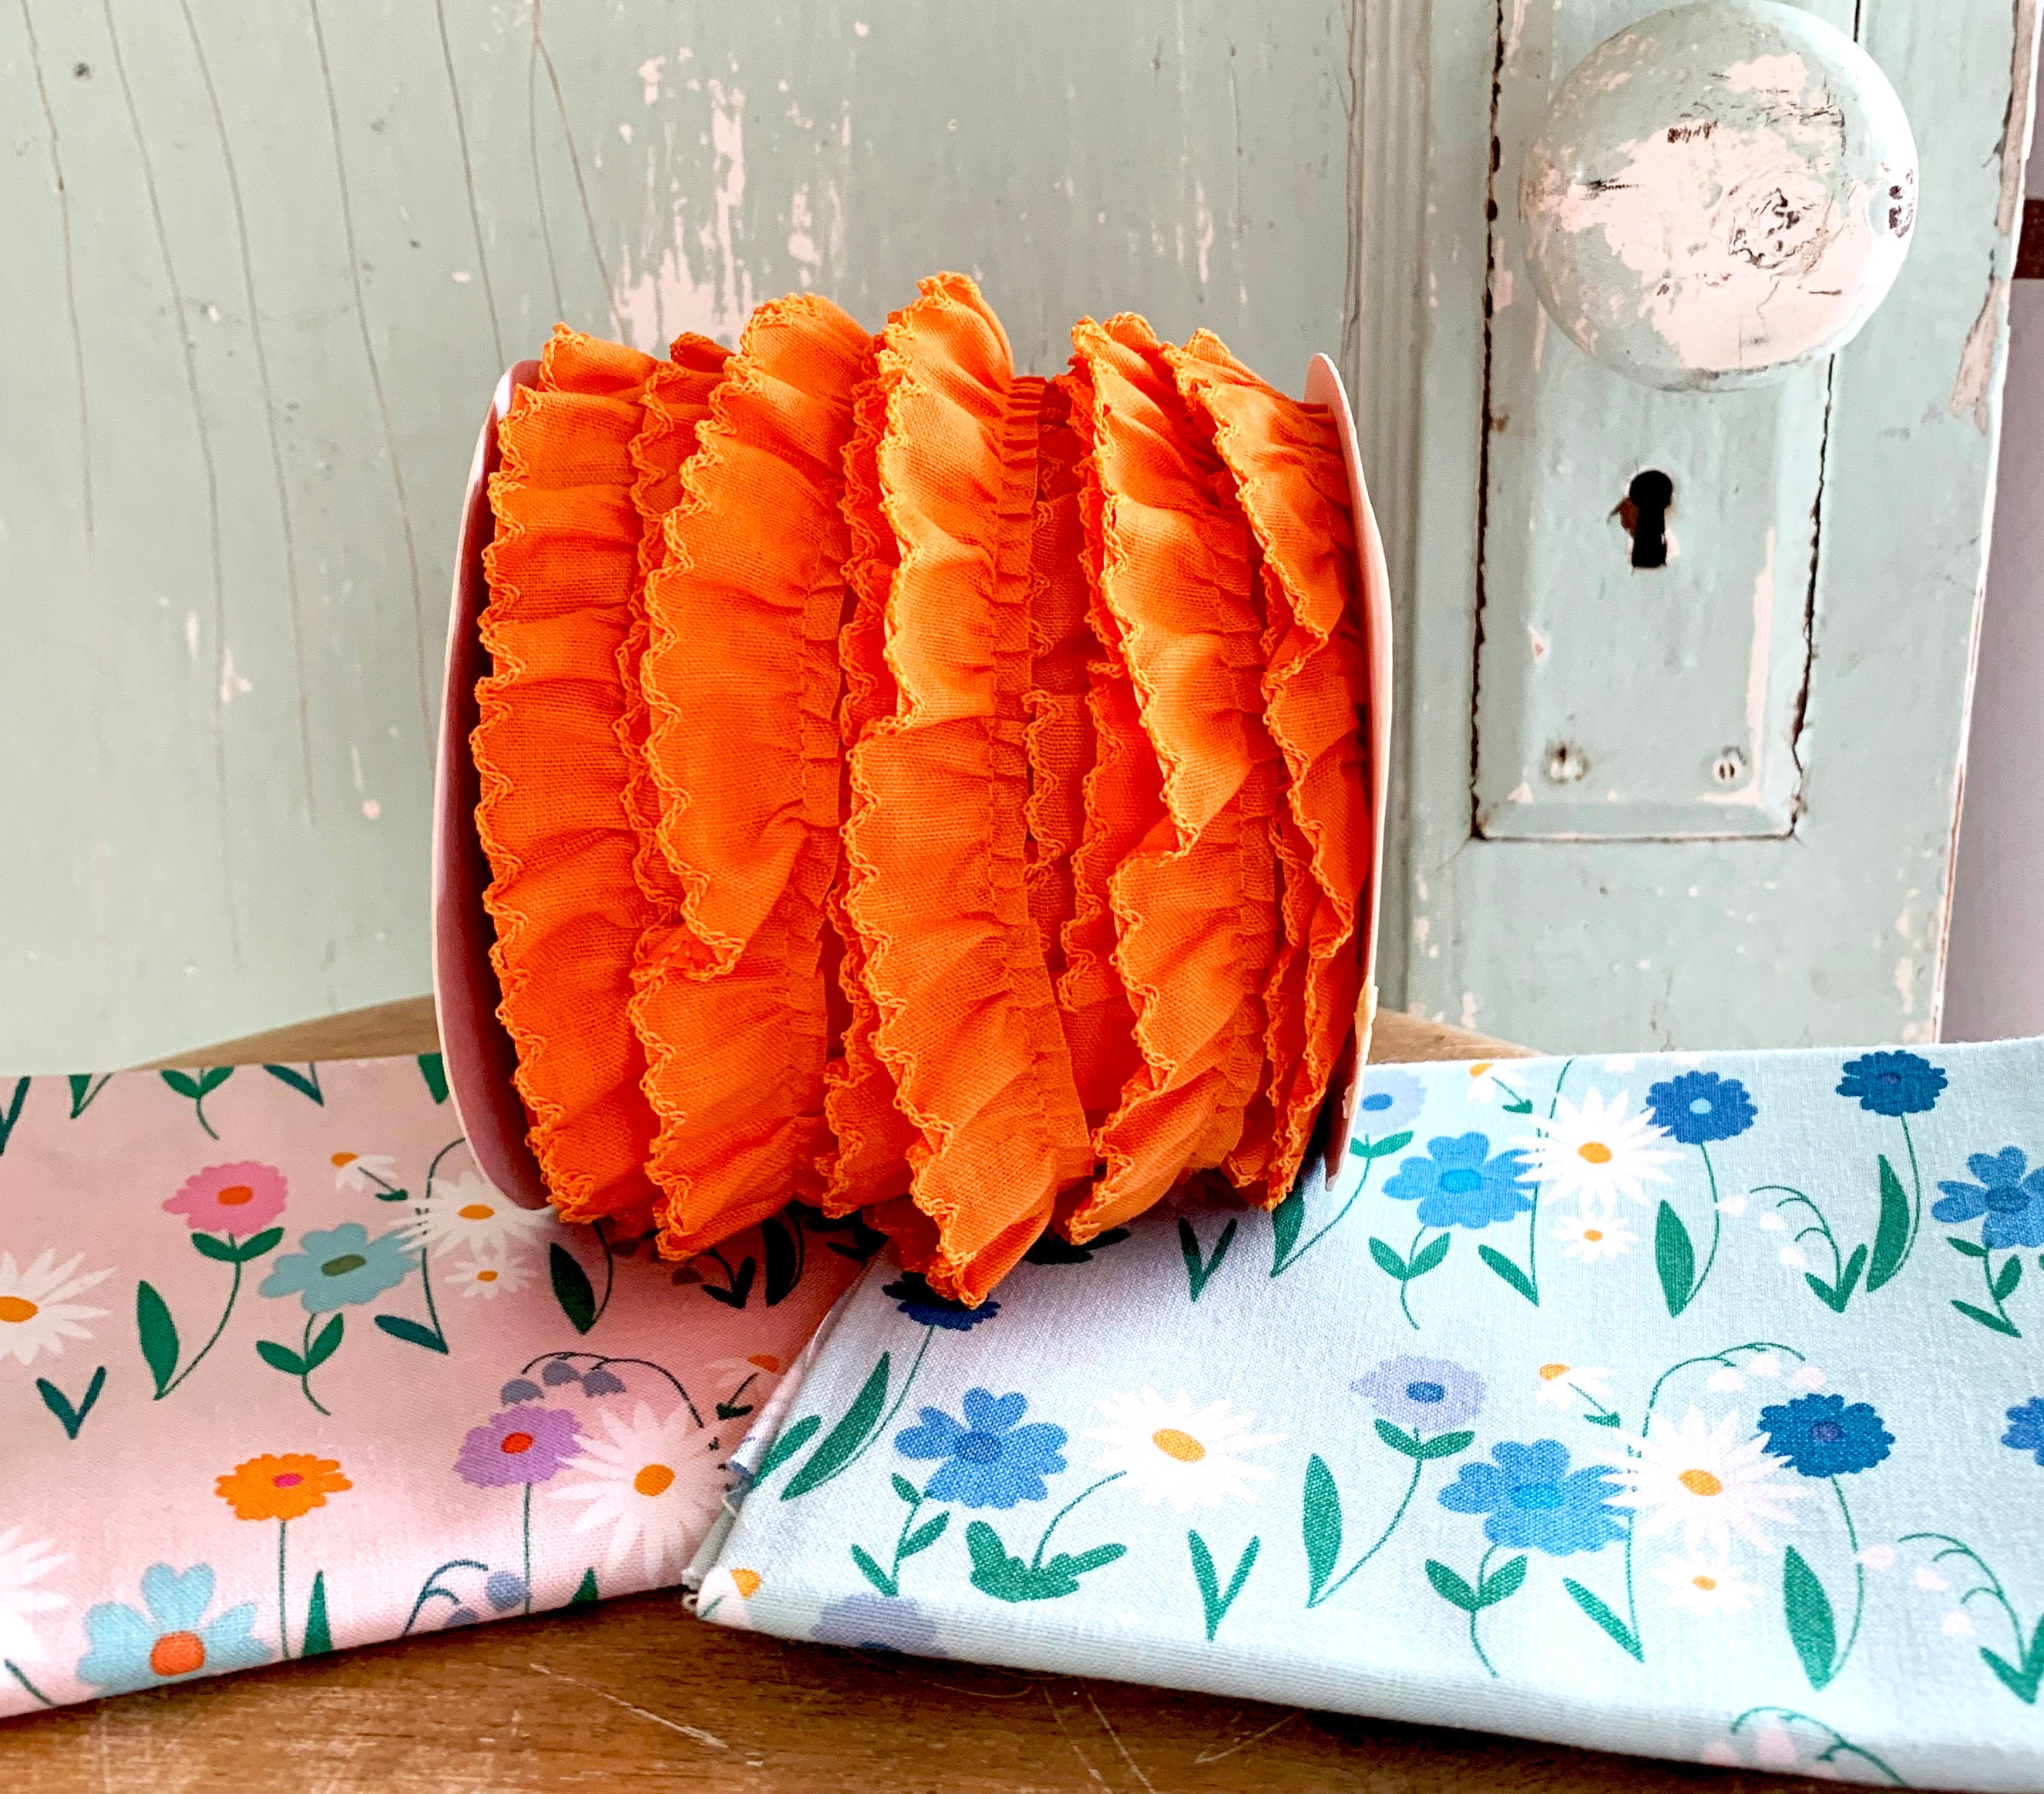 YYCRAFT 11 Yards Satin Ruffle Trim Fabric Trims and Embellishments by The  Yard, 1.5 Inch Orange